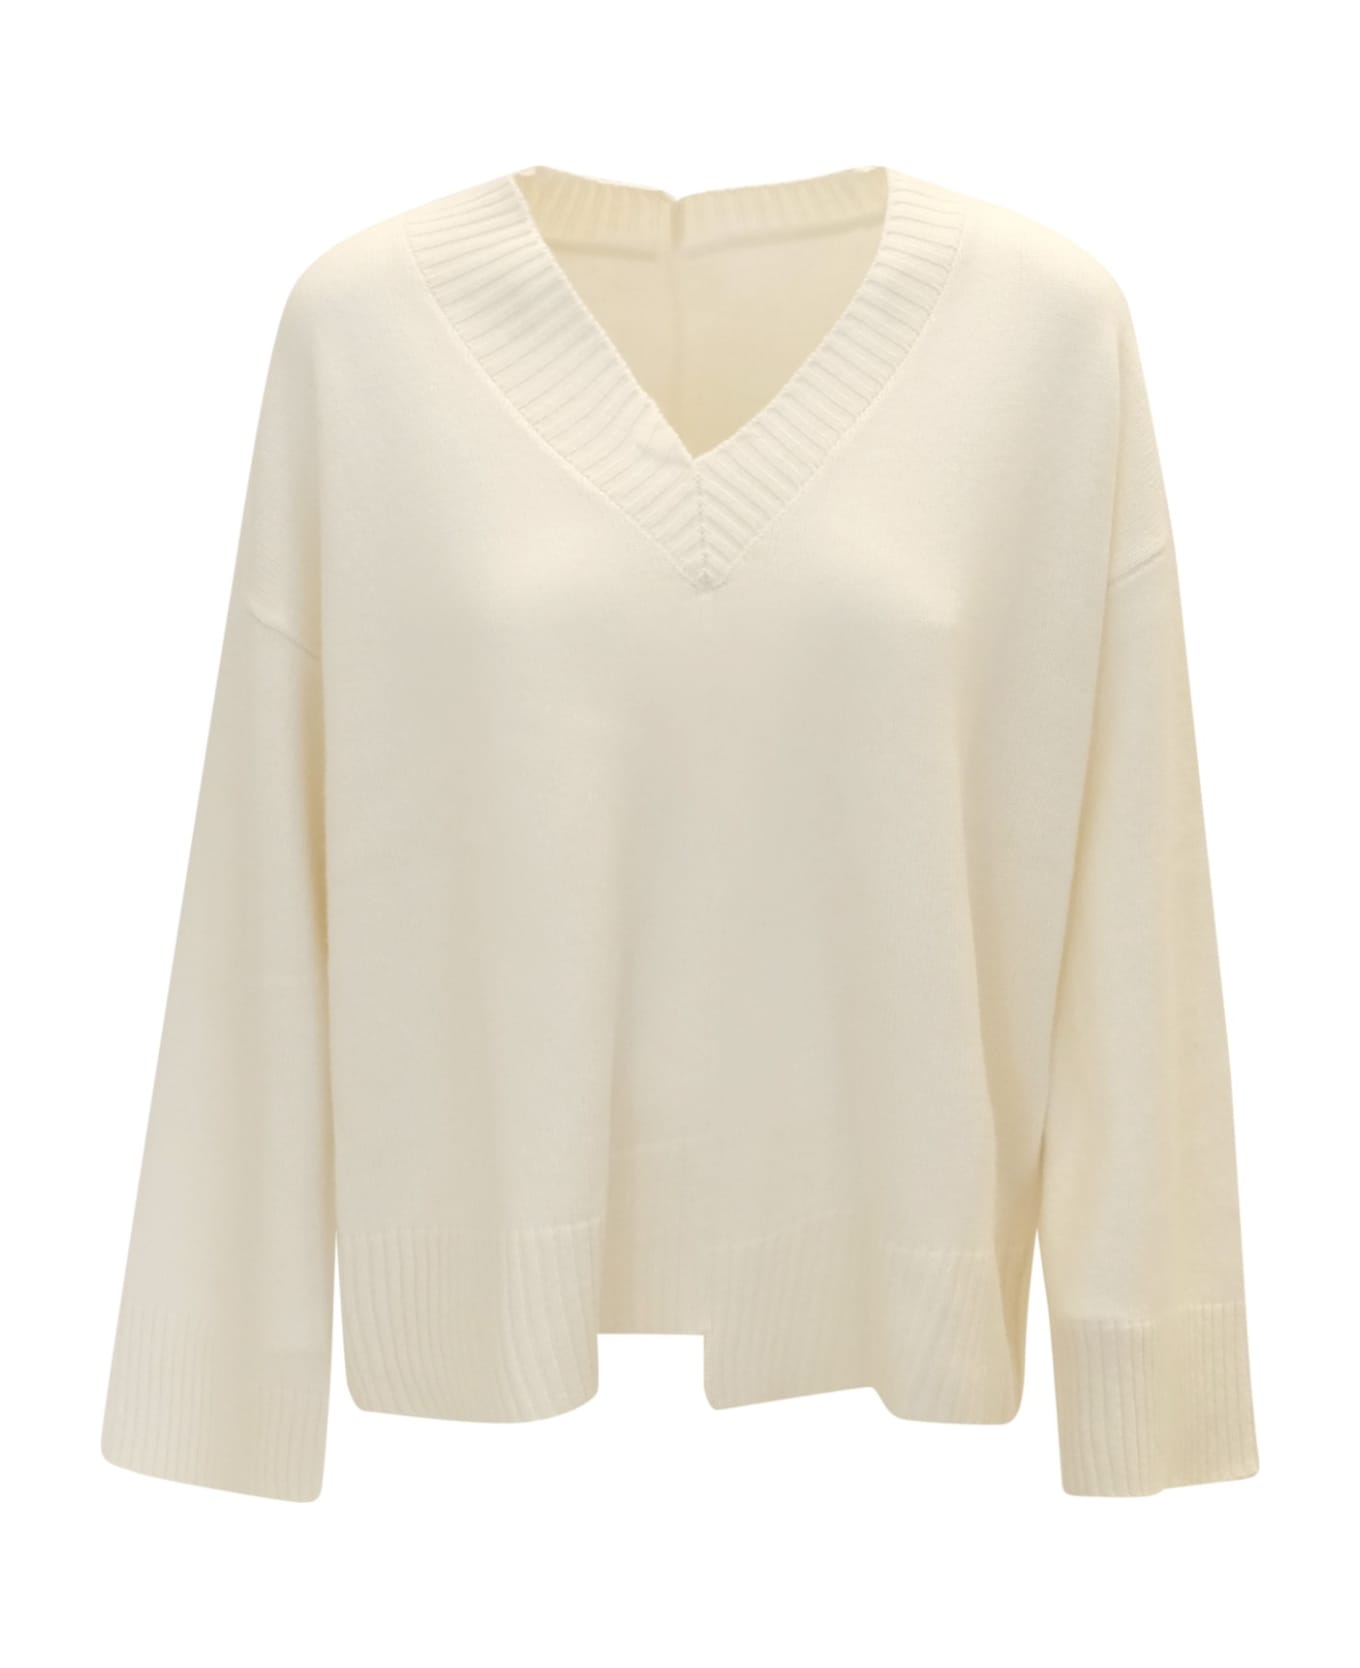 Parosh 002 Led White Sweater - WHITE